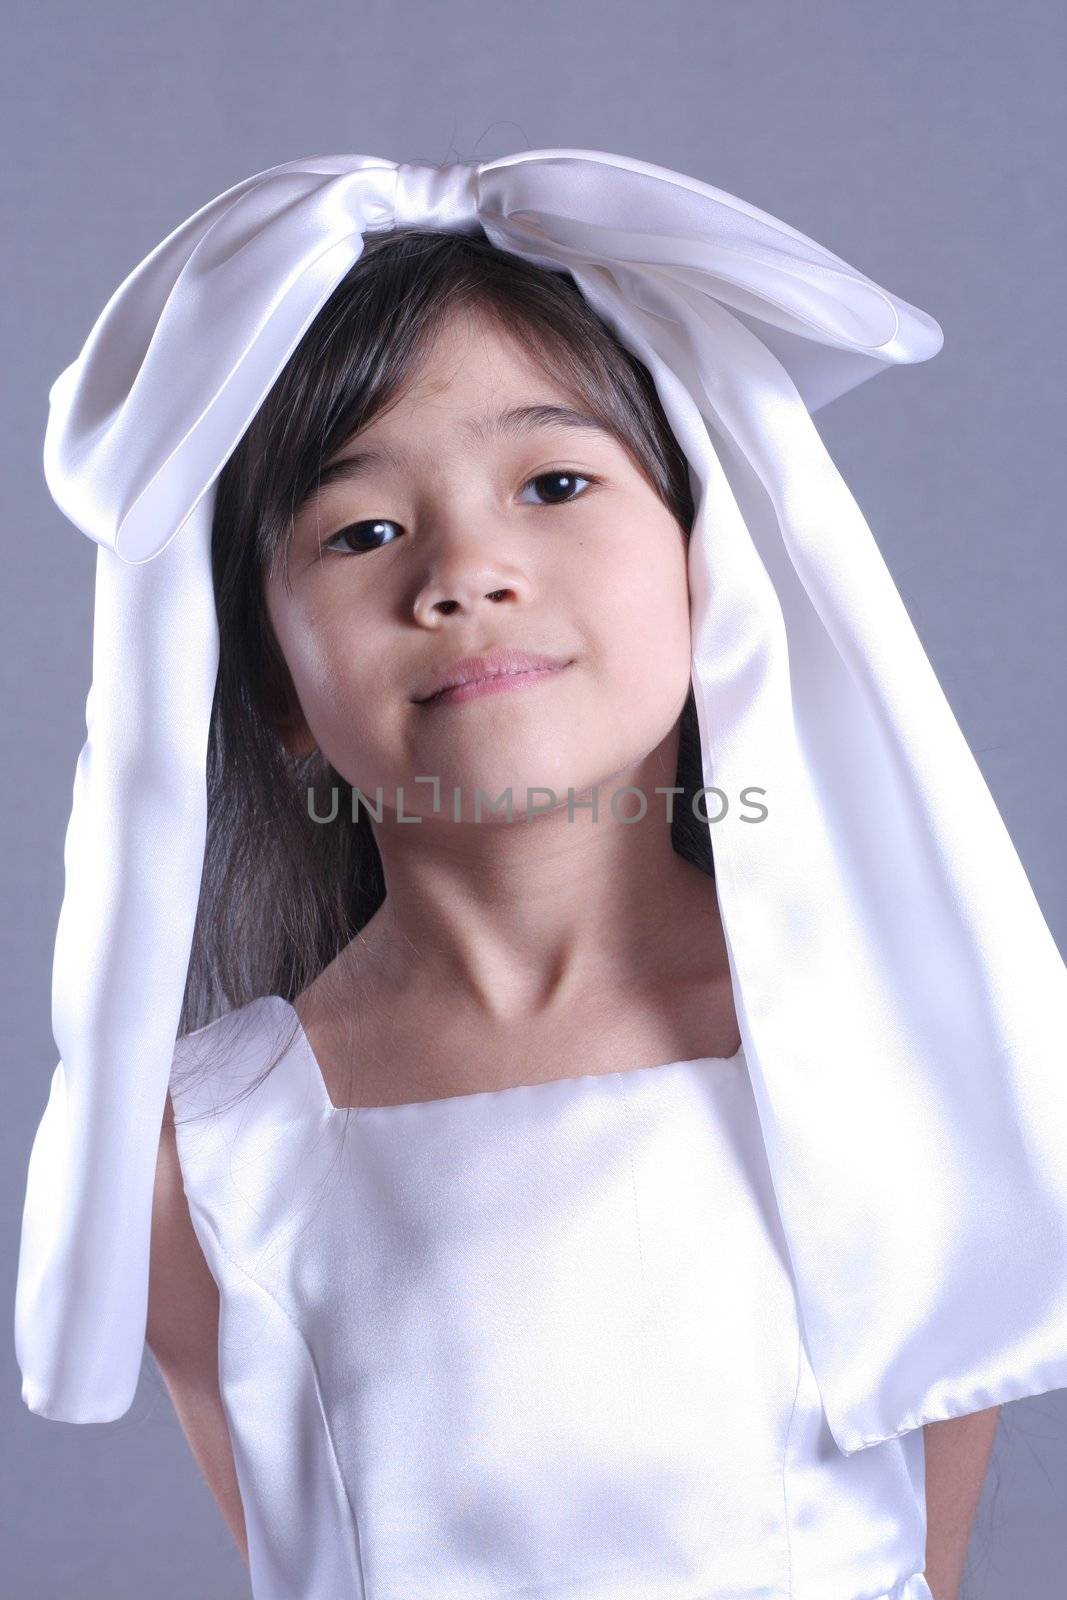 Cute little girl playing dress up by jarenwicklund